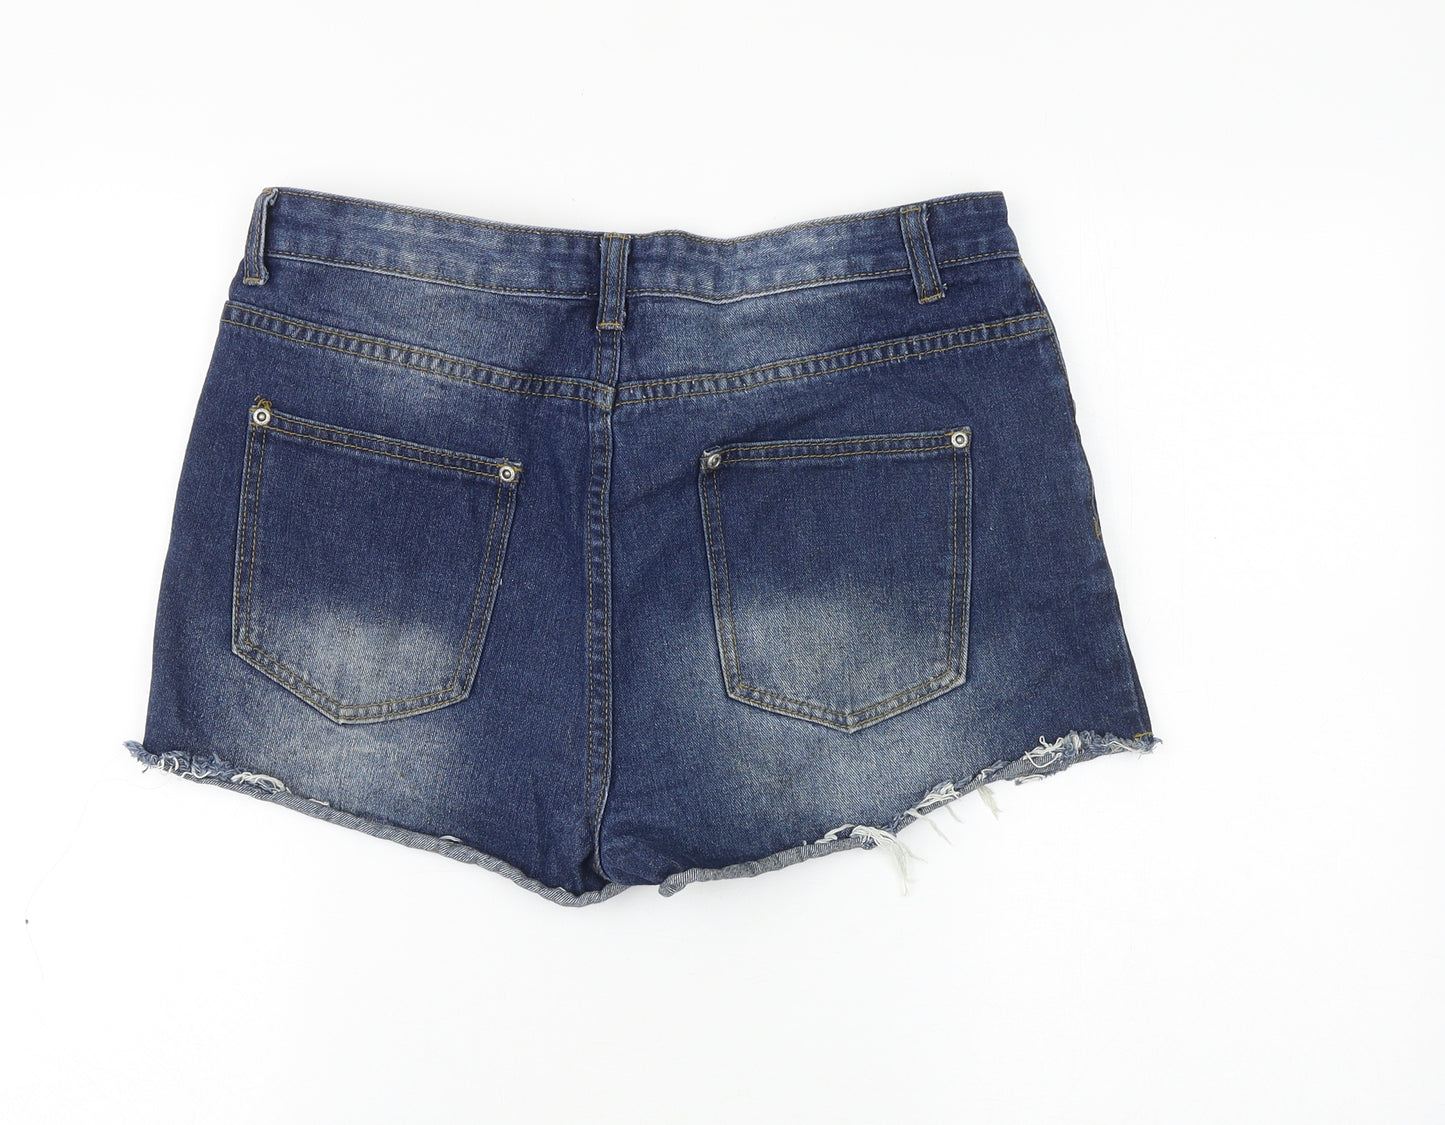 Boohoo Womens Blue Cotton Hot Pants Shorts Size 14 Regular Zip - Distressed